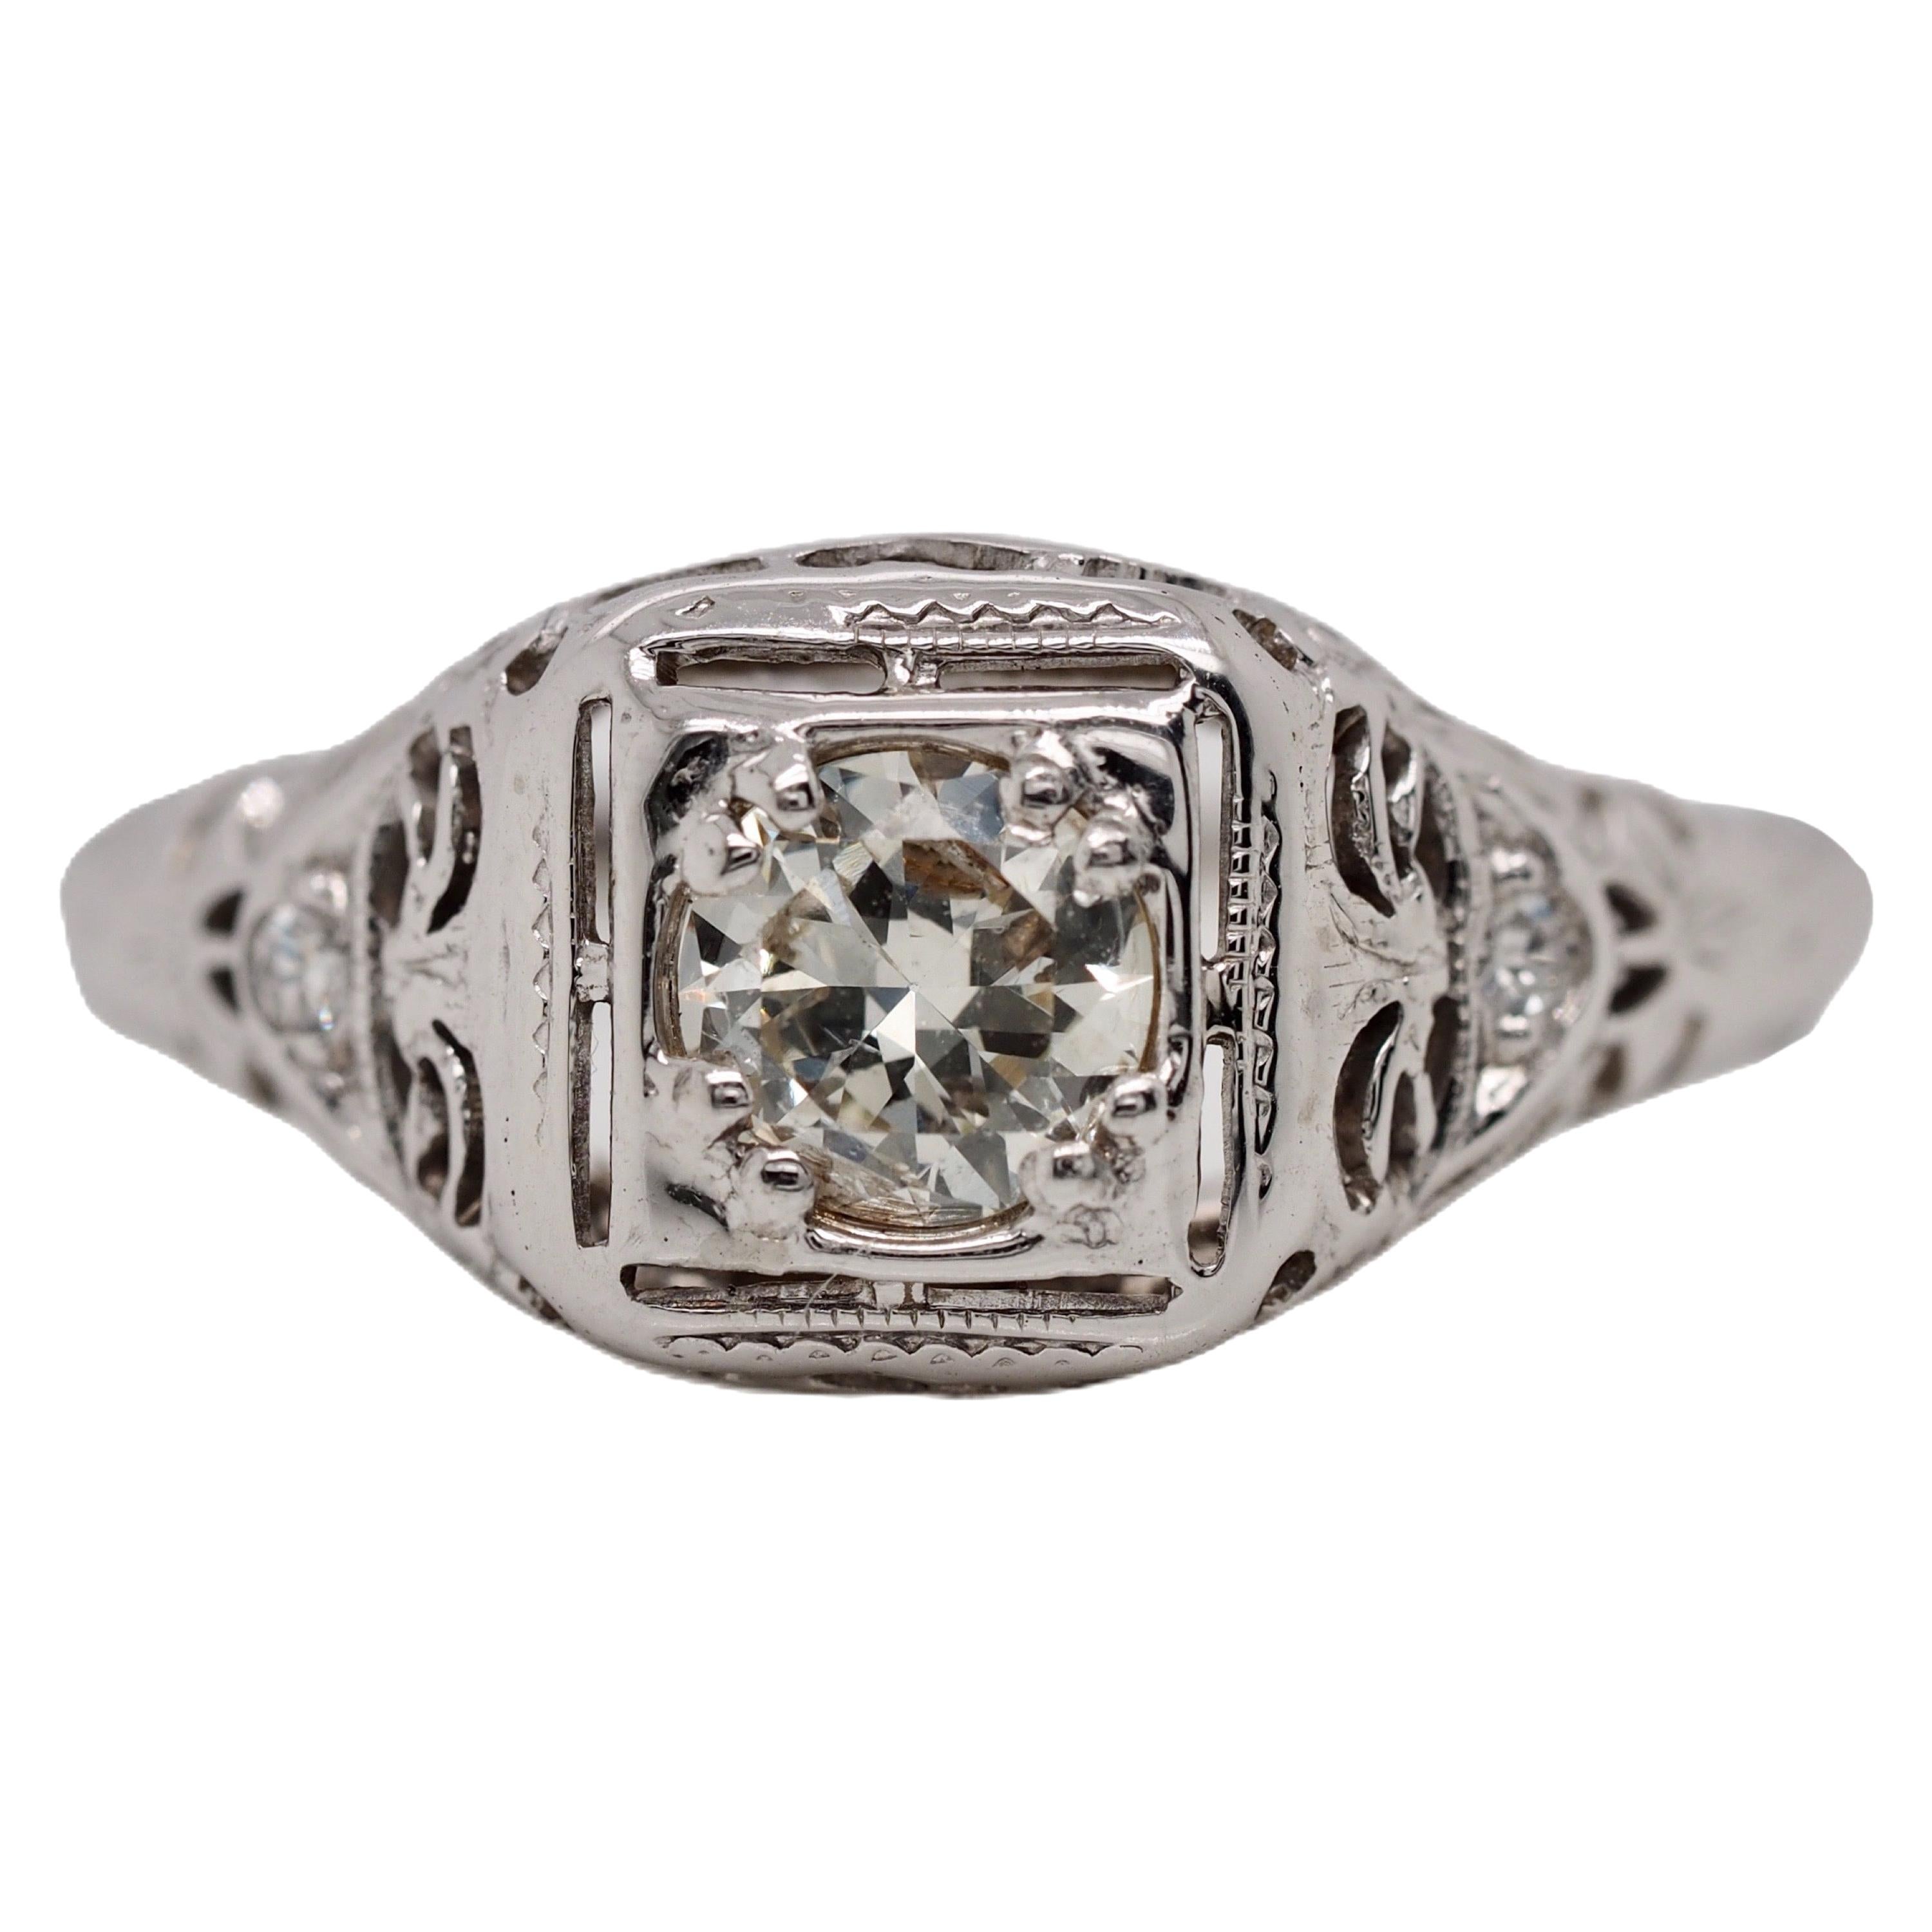 18 Karat White Gold Art Deco Ring with Modified Round Brilliant Cut Diamond